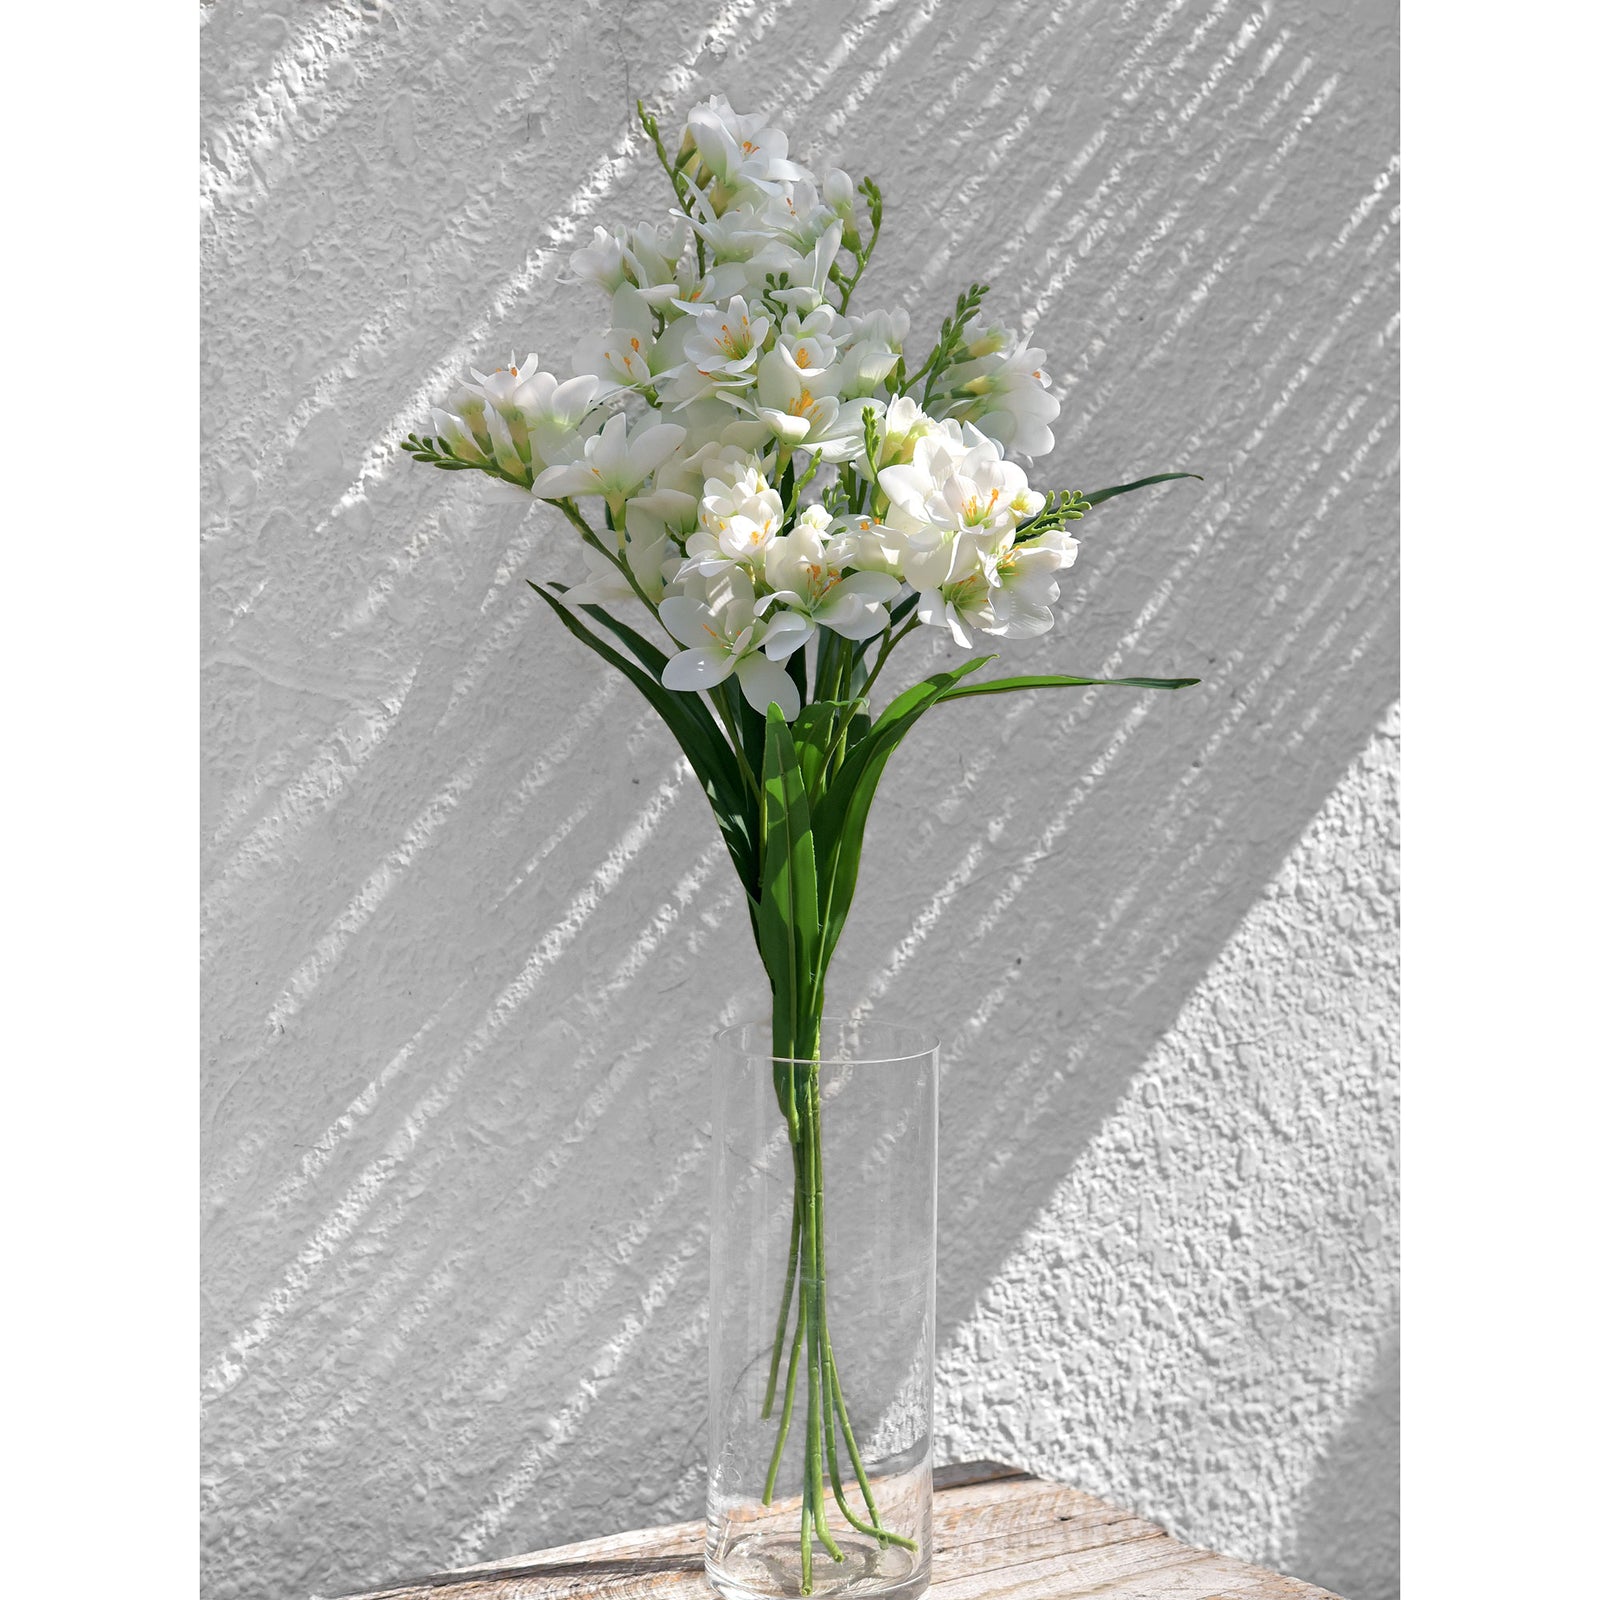 Real Touch Freesia (White) Long Stem Realistic Artificial Flowers, Wedding, Home Decor, Arrangment 6 Stems -FiveSeasonStuff